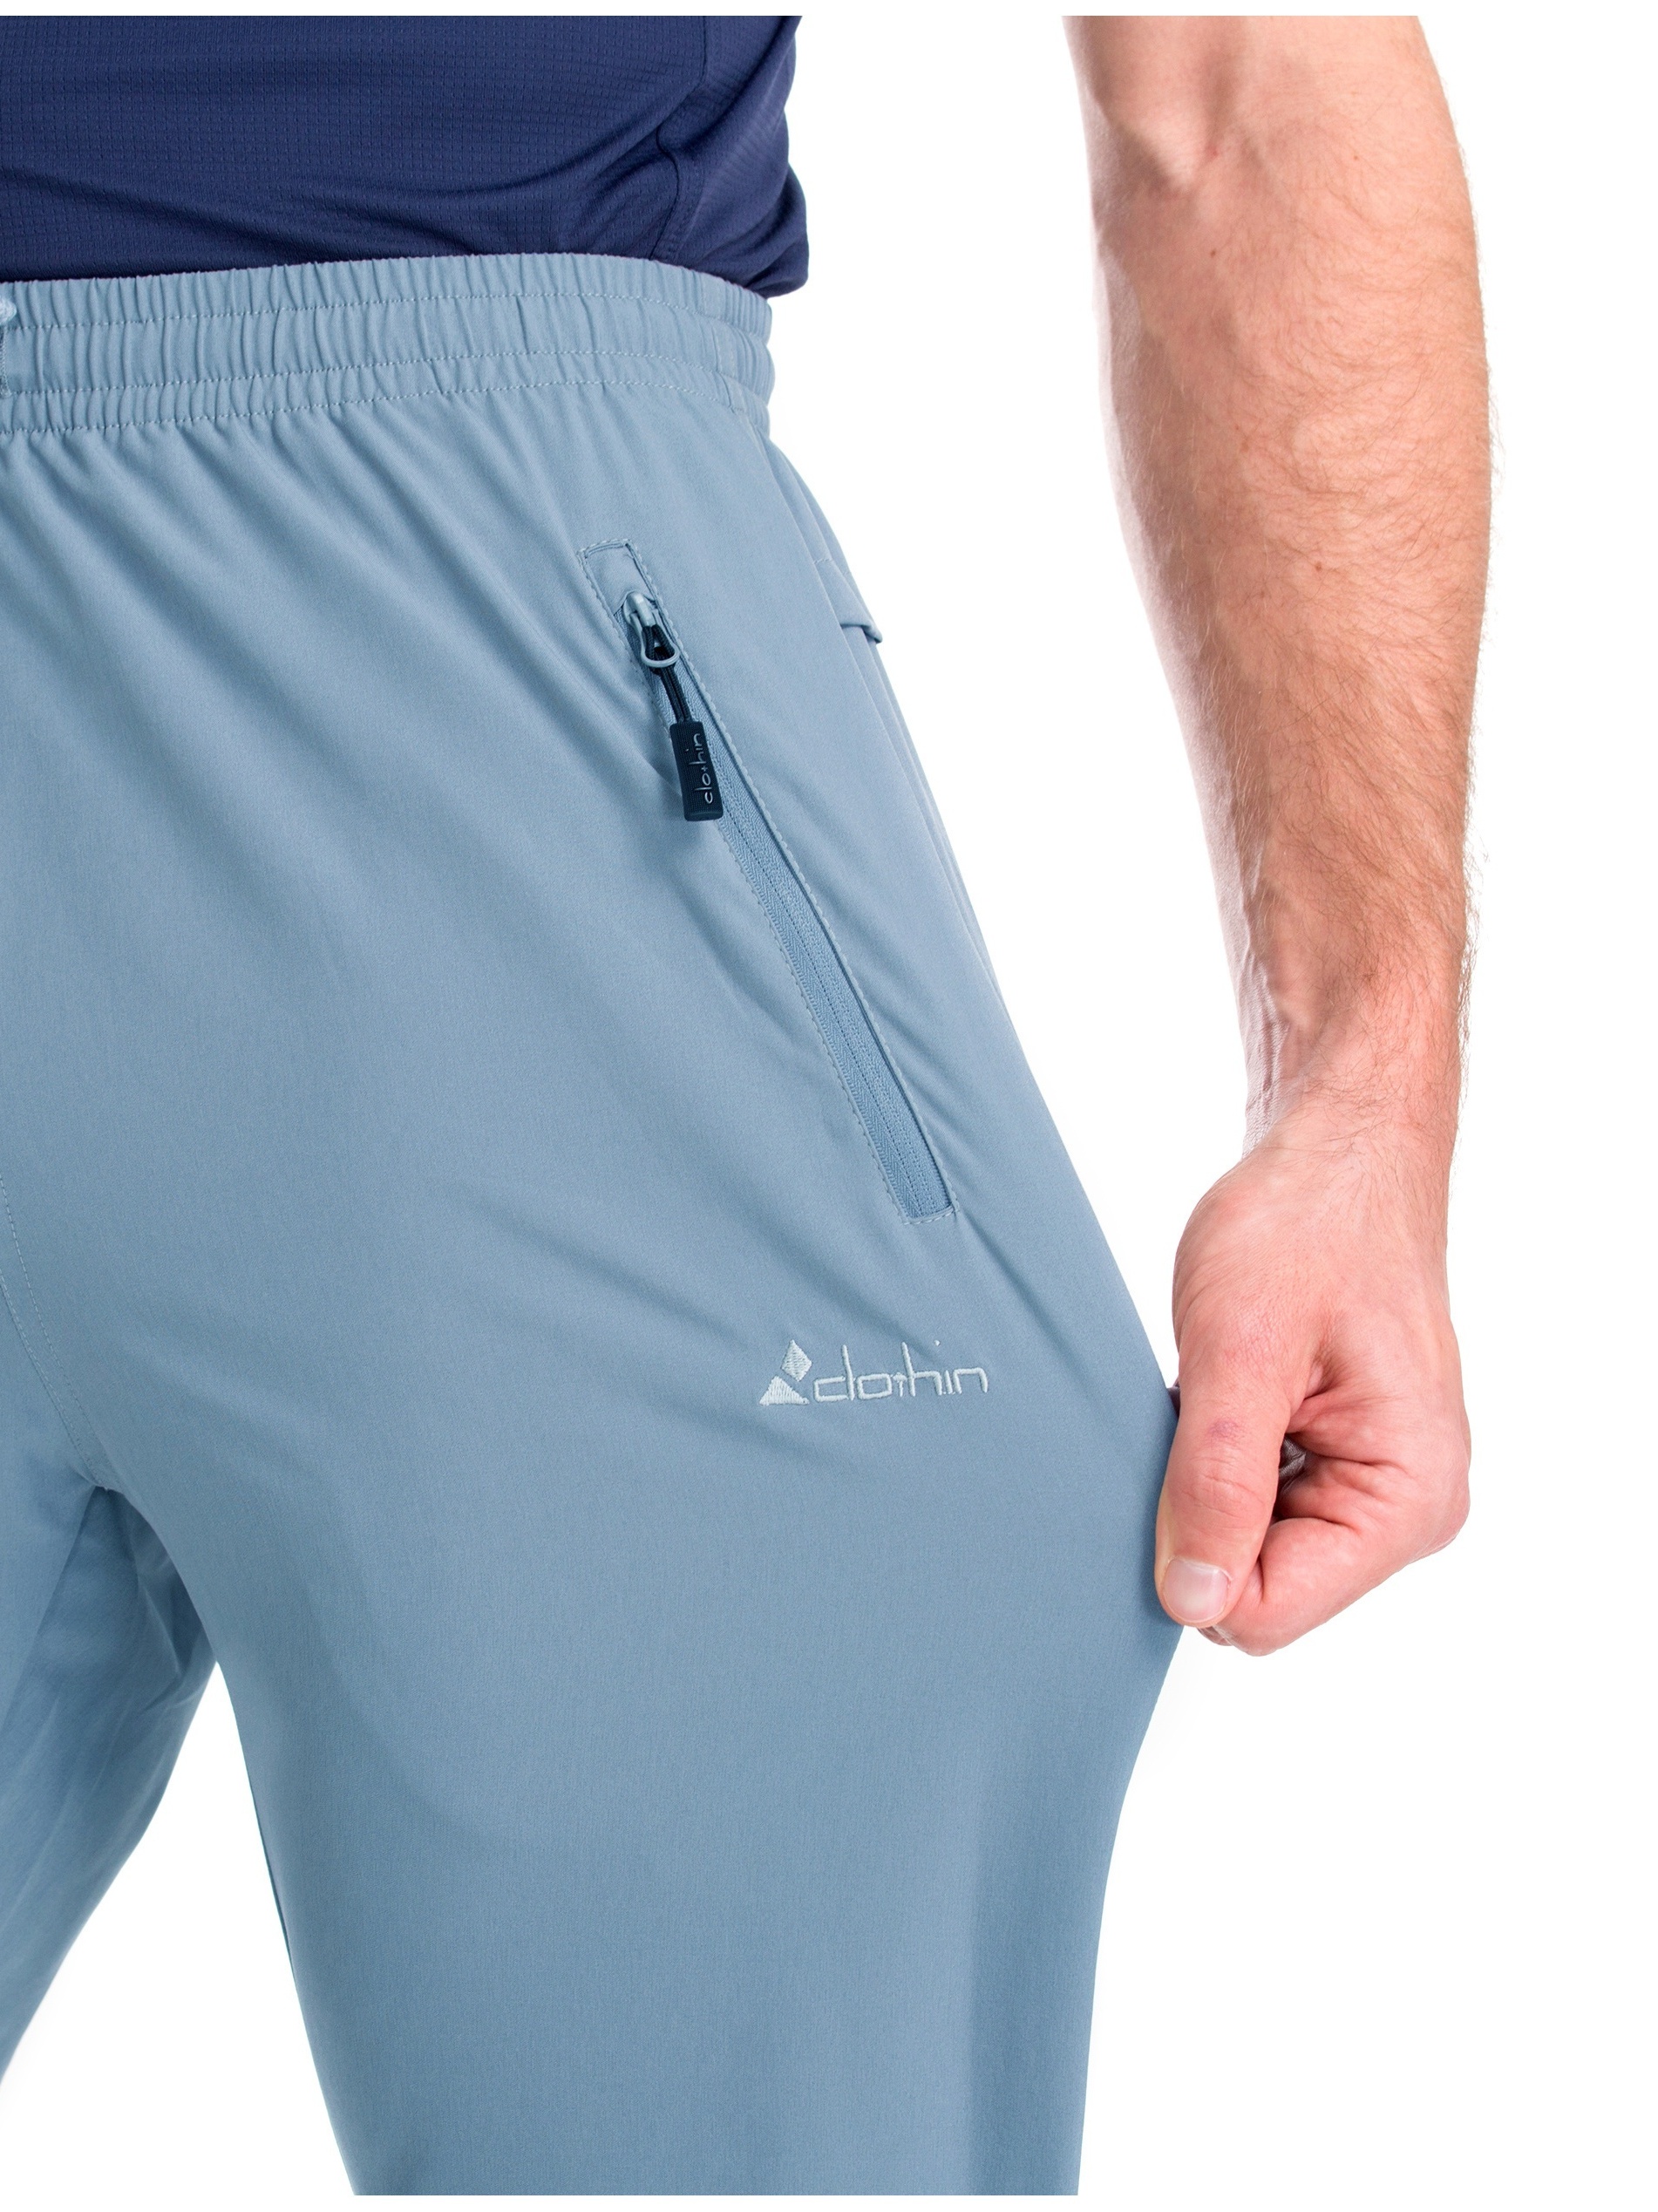  clothin Mens Workout Athletic Pants Elastic-Waist